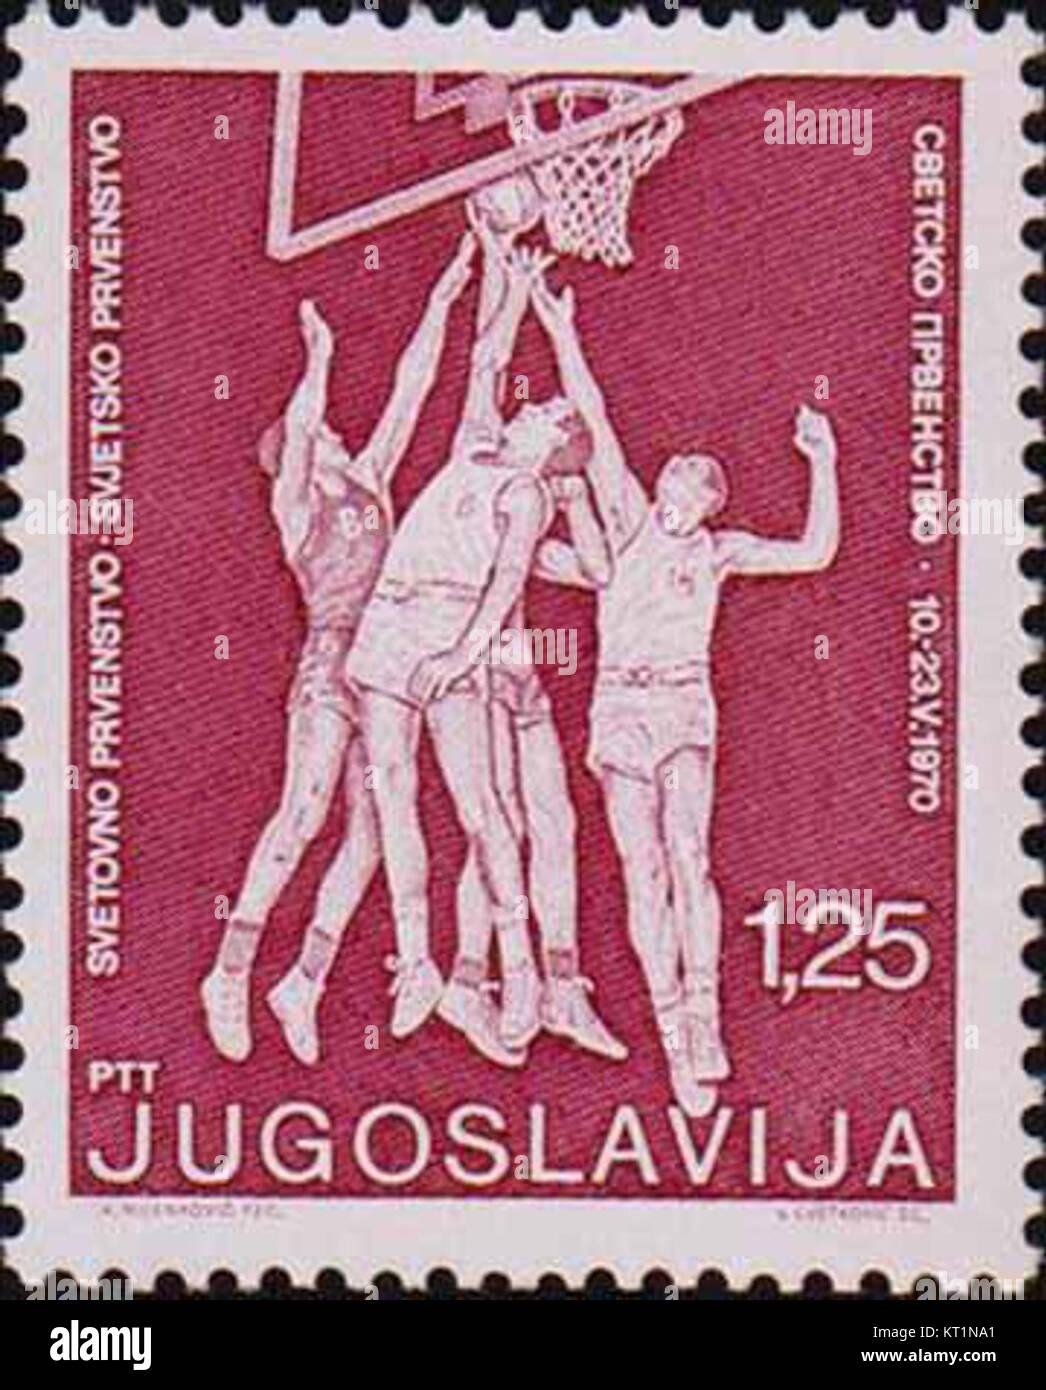 1970 FIBA World Championship stamp of Yugoslavia Stock Photo